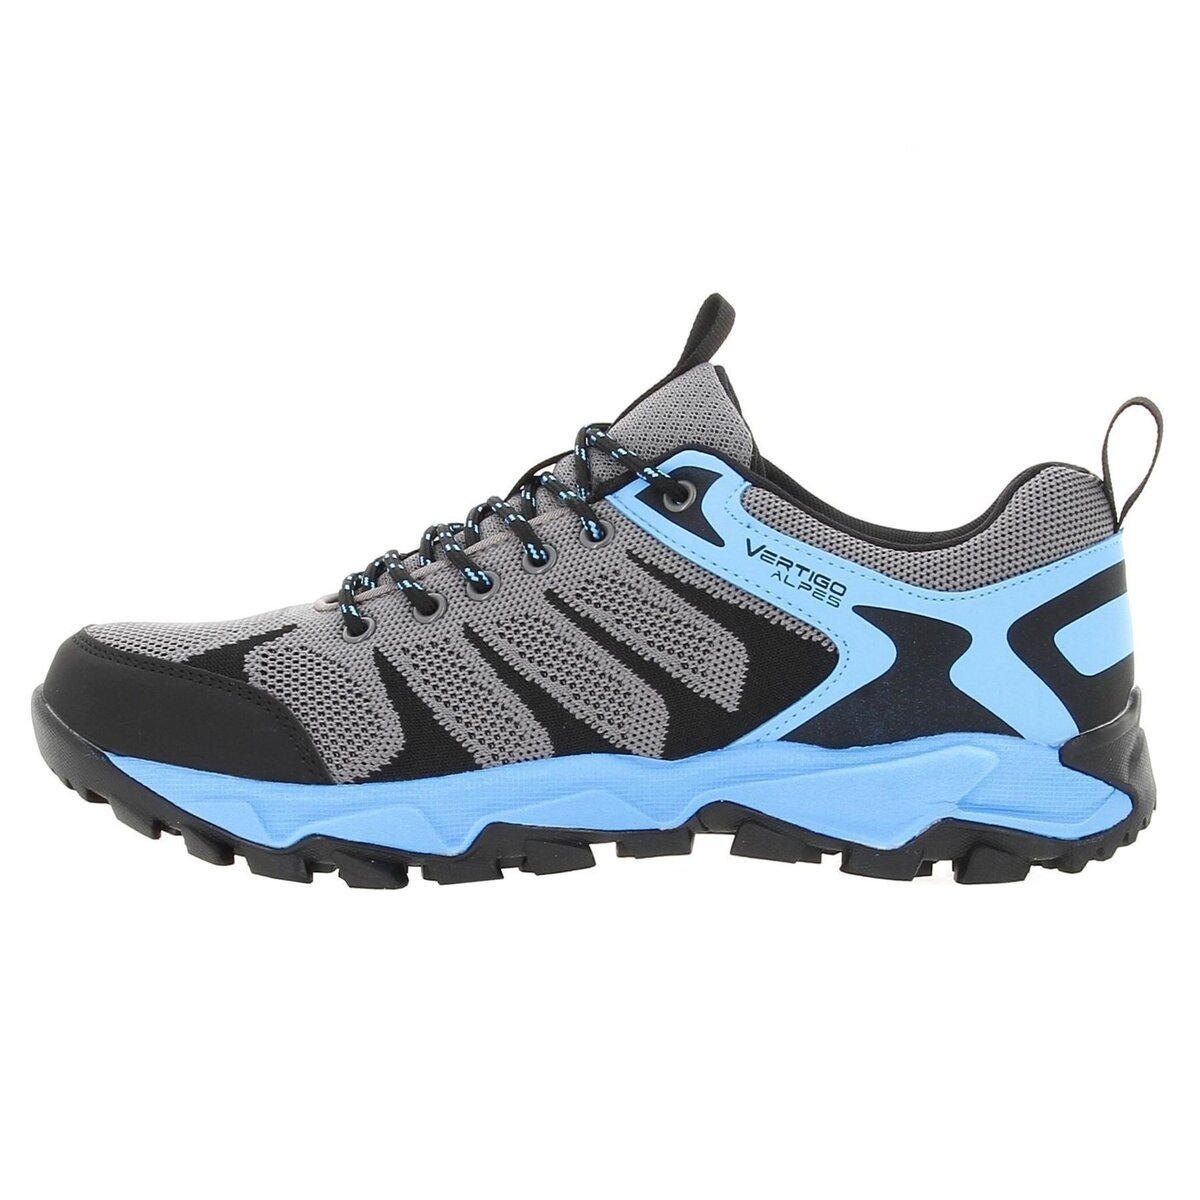 ALPES VERTIGO Chaussures marche randonnées Alpes vertigo Mombo noir/bleu  7-253